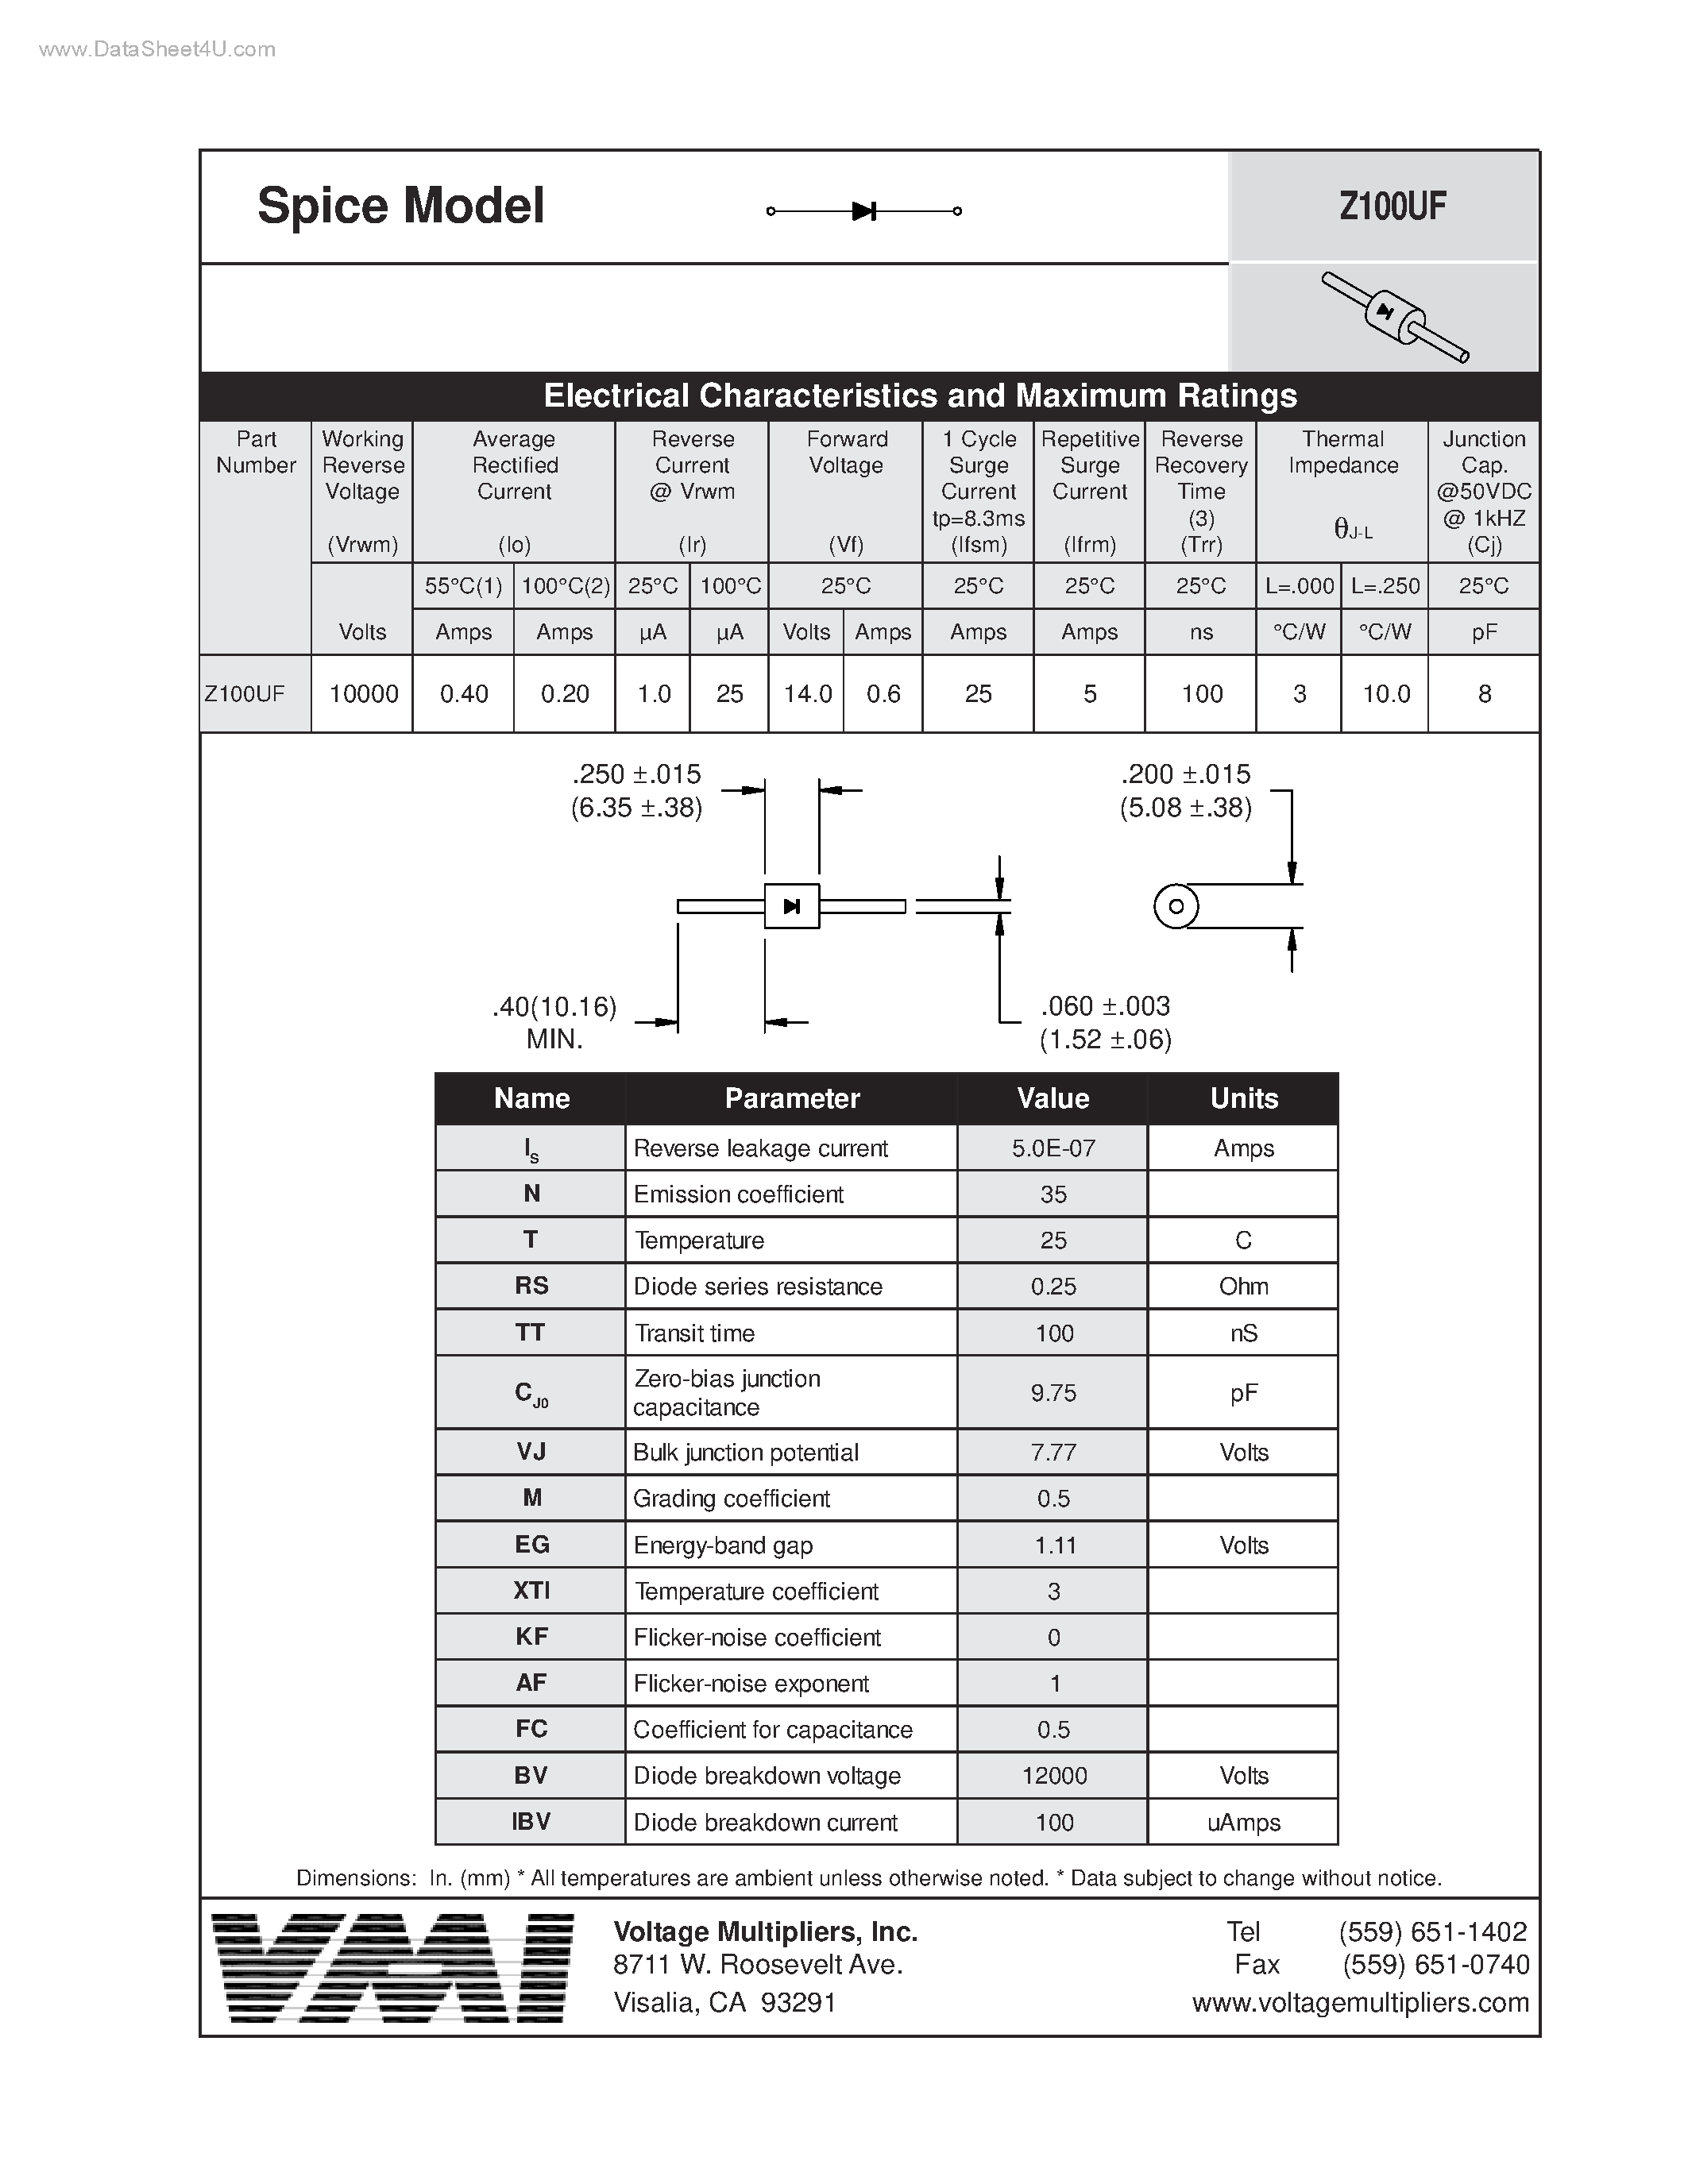 Datasheet Z100UF - Spice Model page 1